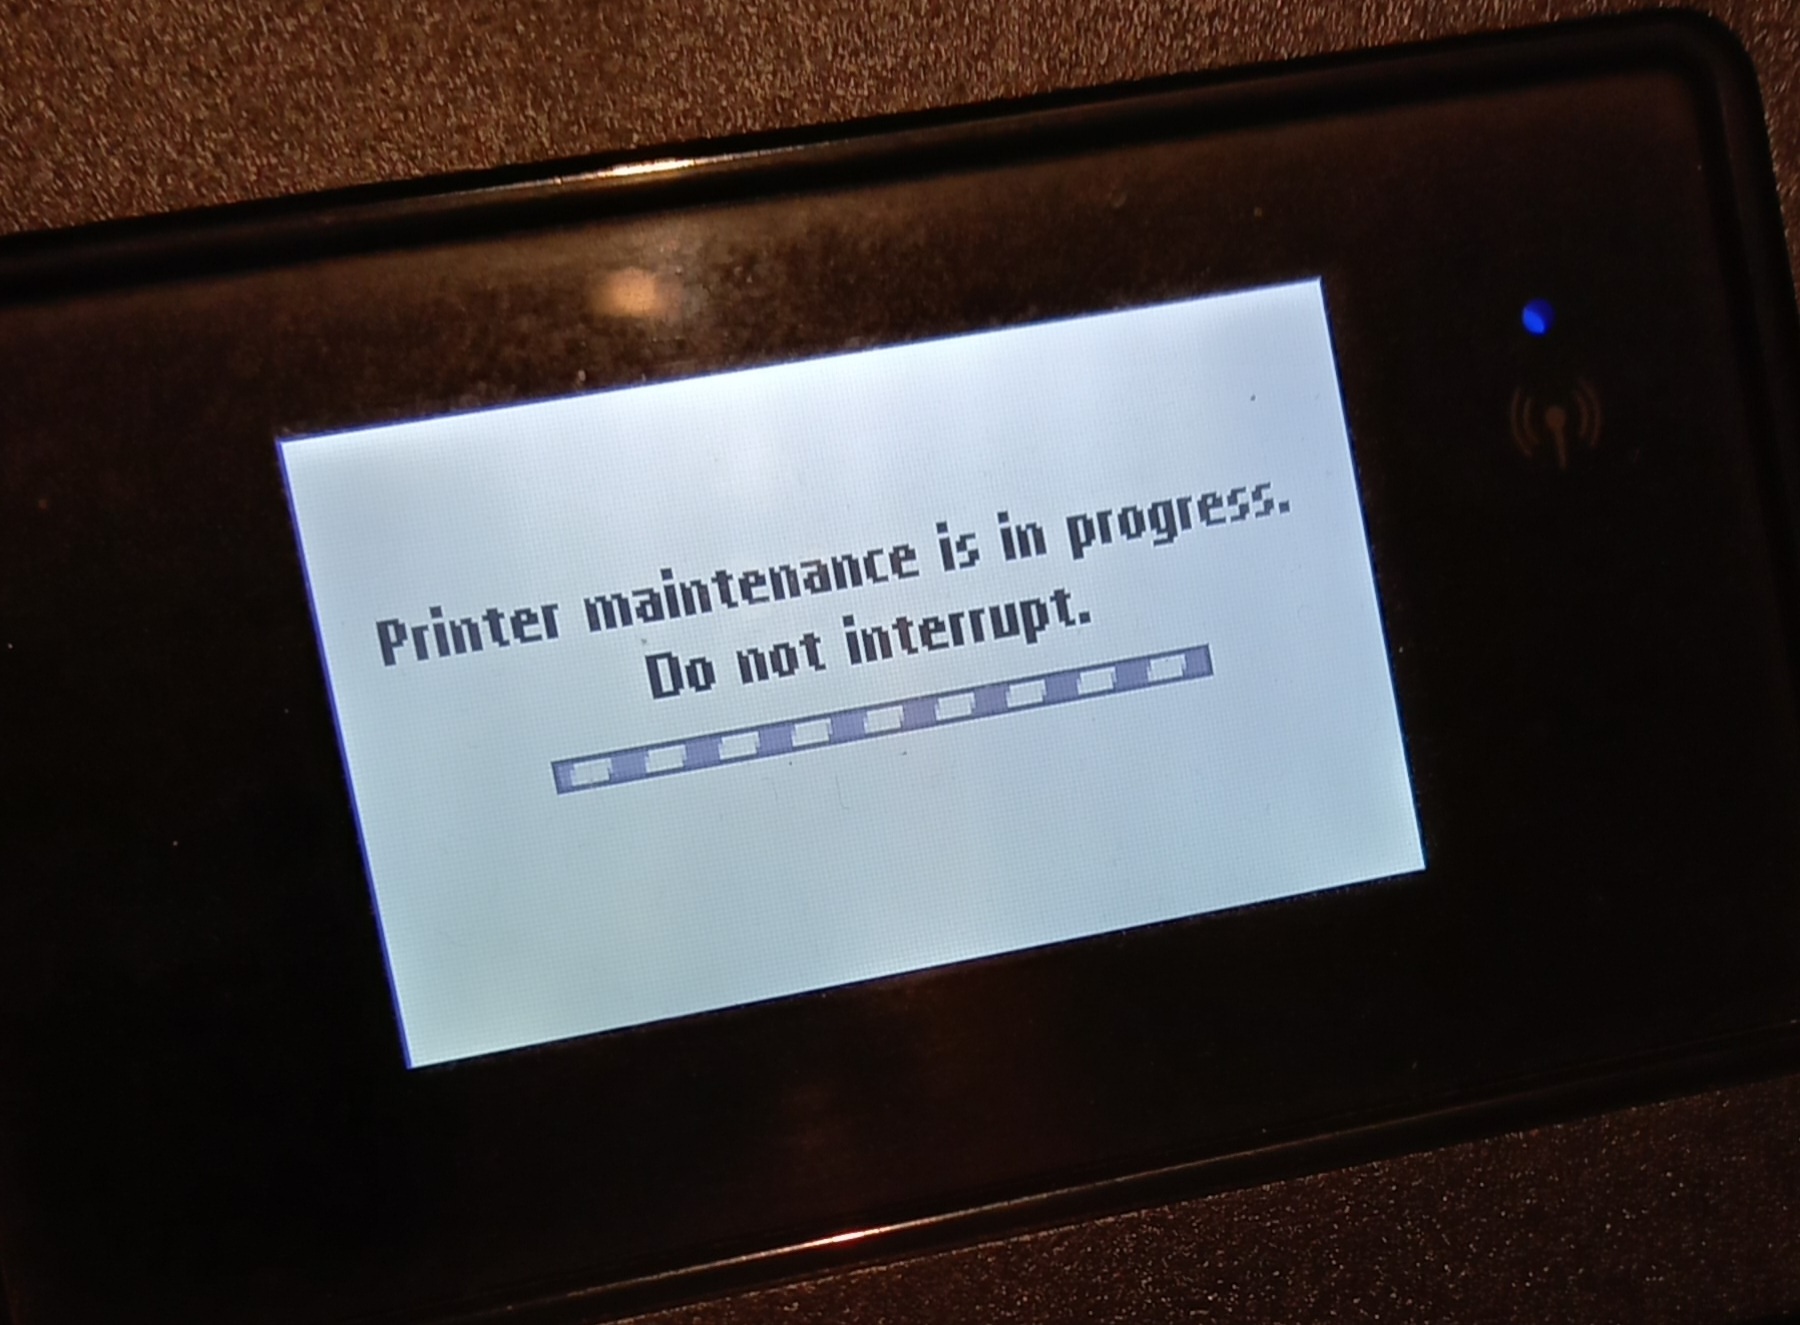 High Quality Printer maintenance in progress Blank Meme Template